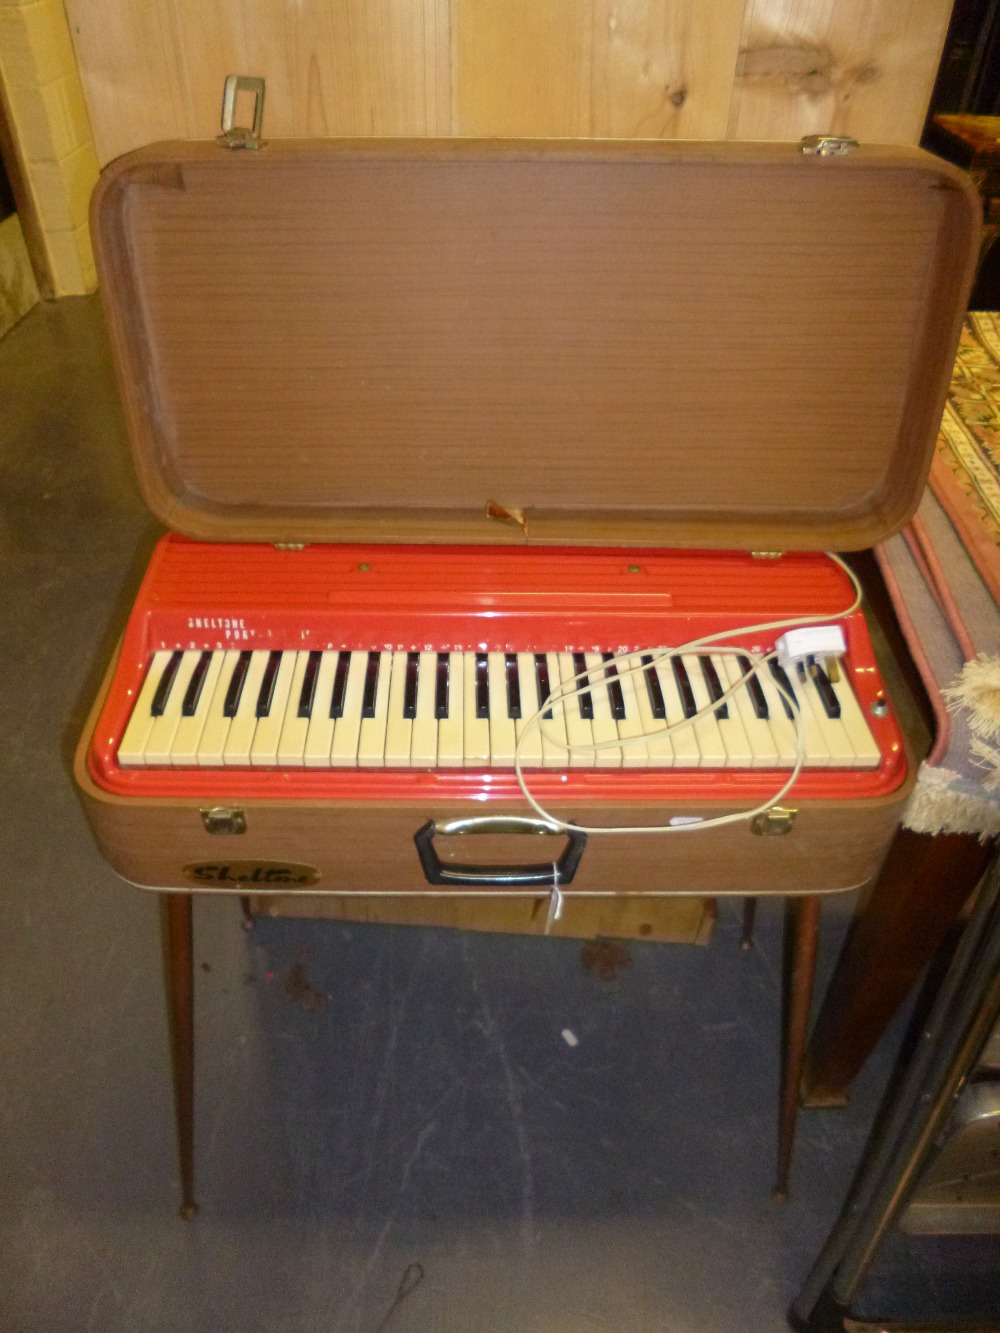 A Sheltone electric organ